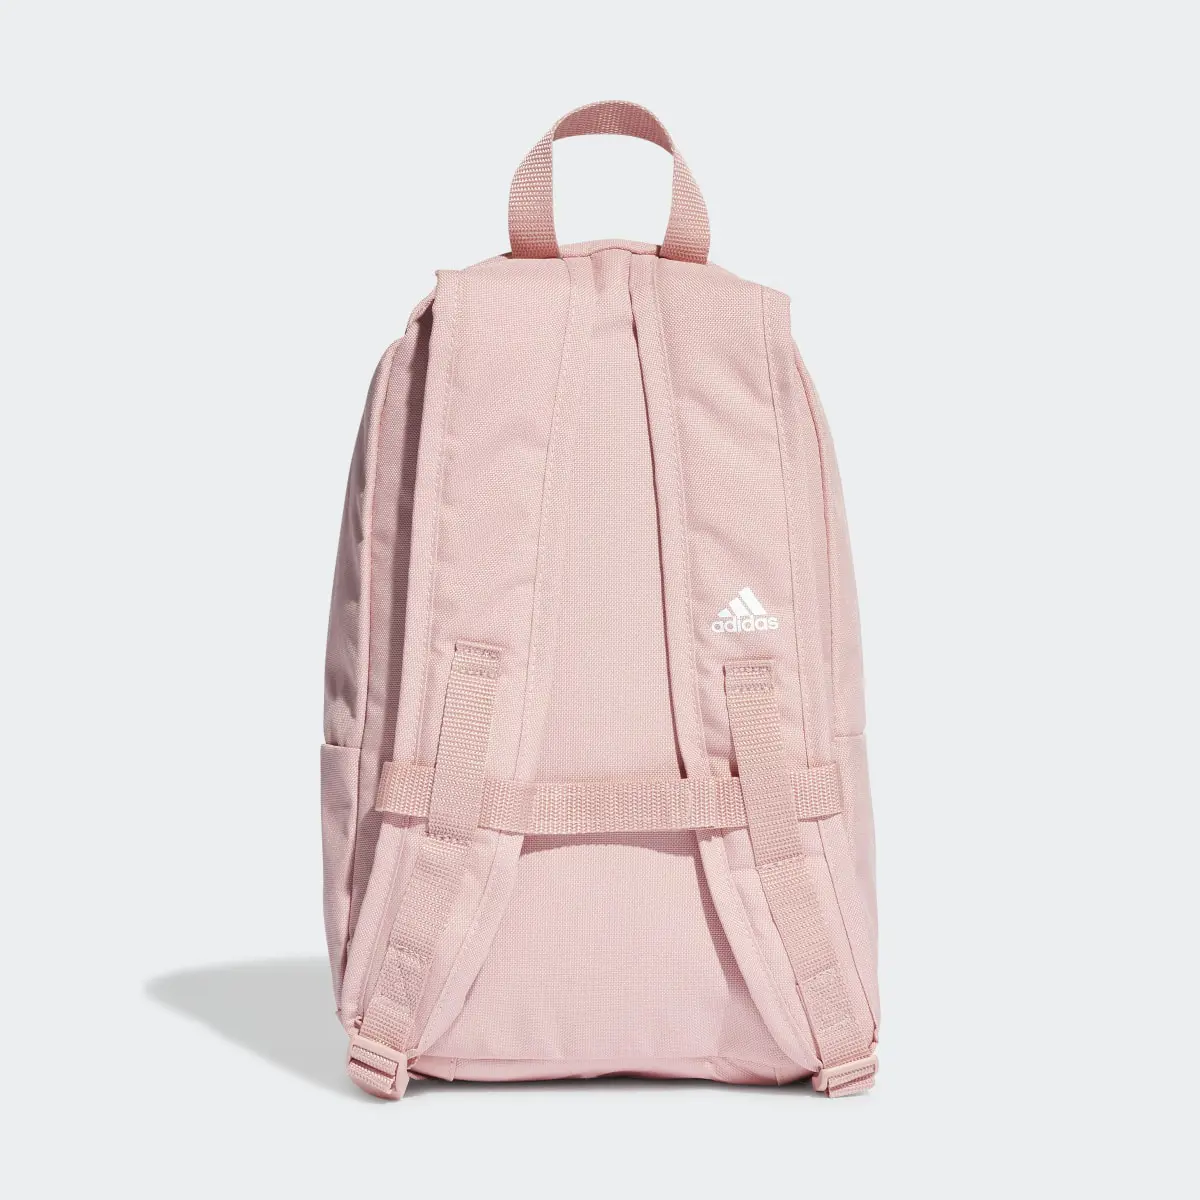 Adidas Backpack. 3